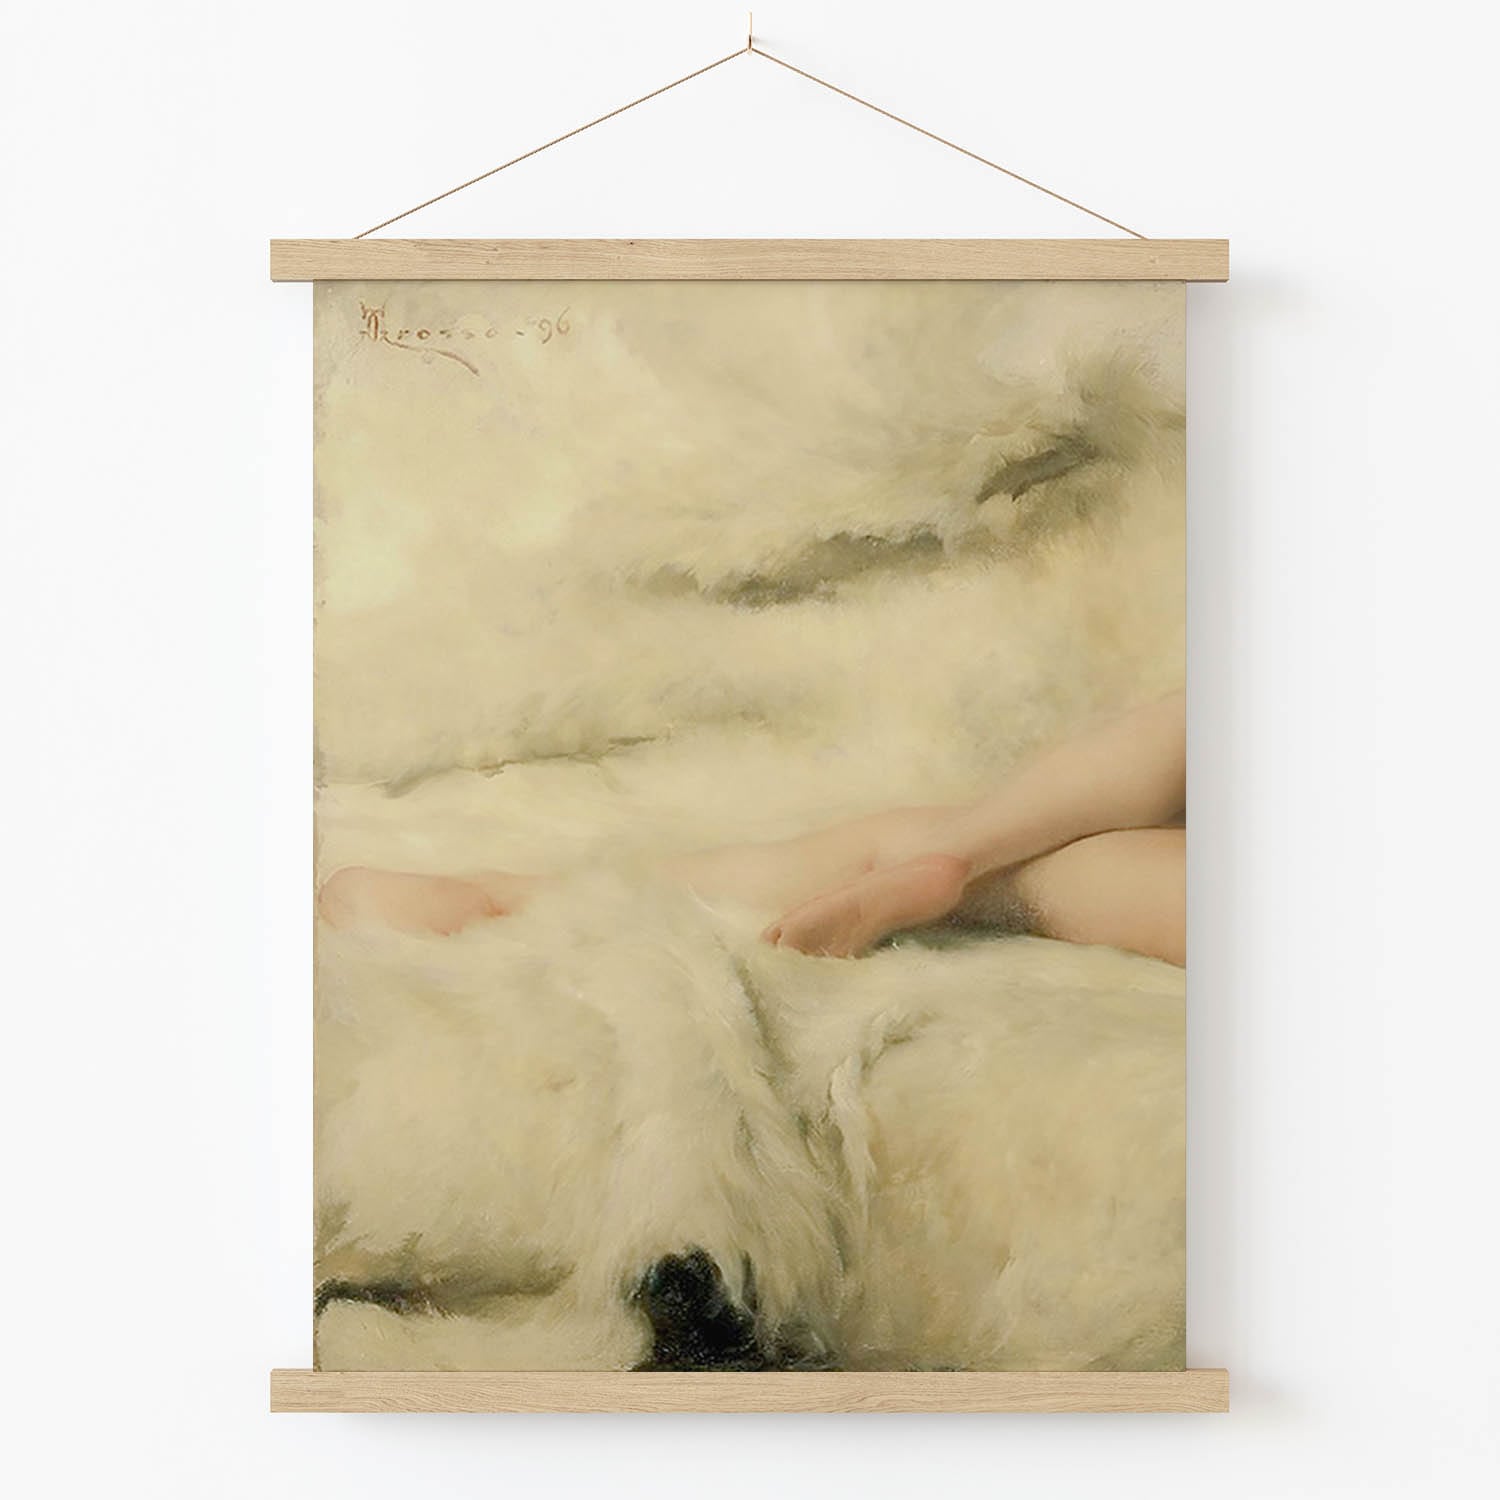 Womans Legs on a White Fur Blanket Art Print in Wood Hanger Frame on Wall